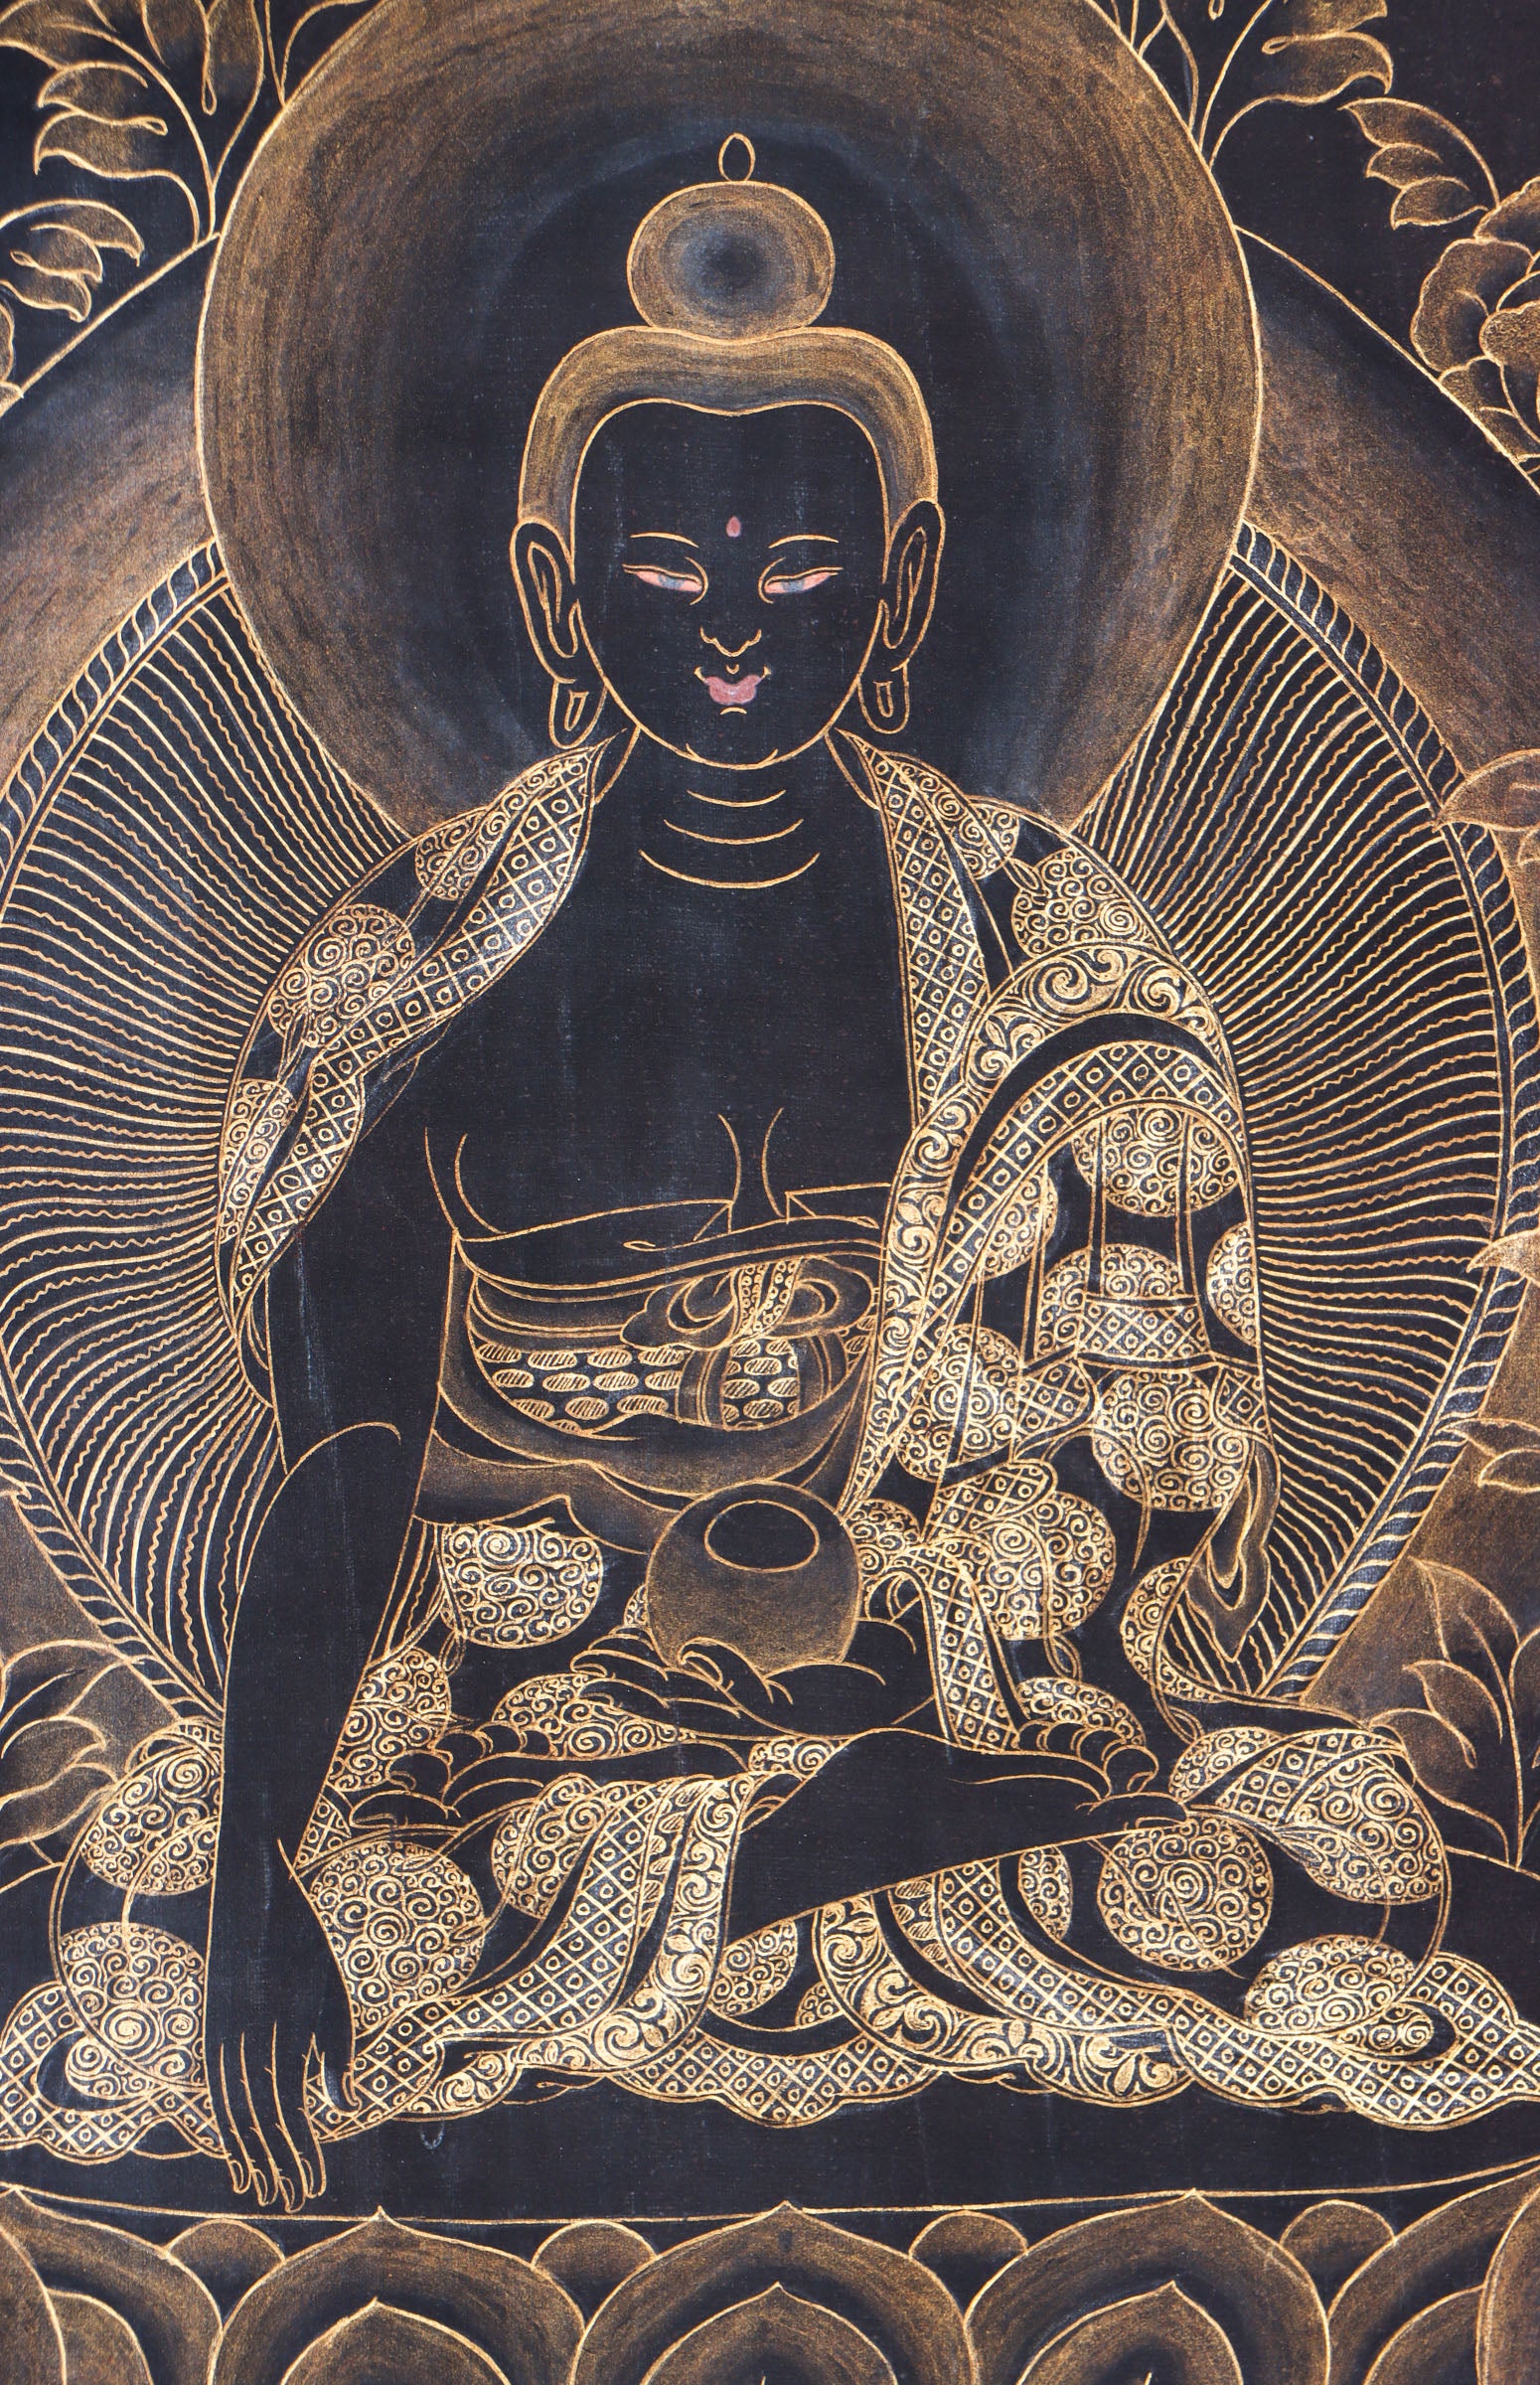 Antique Shakyamuni Buddha Thangka for enlightment.